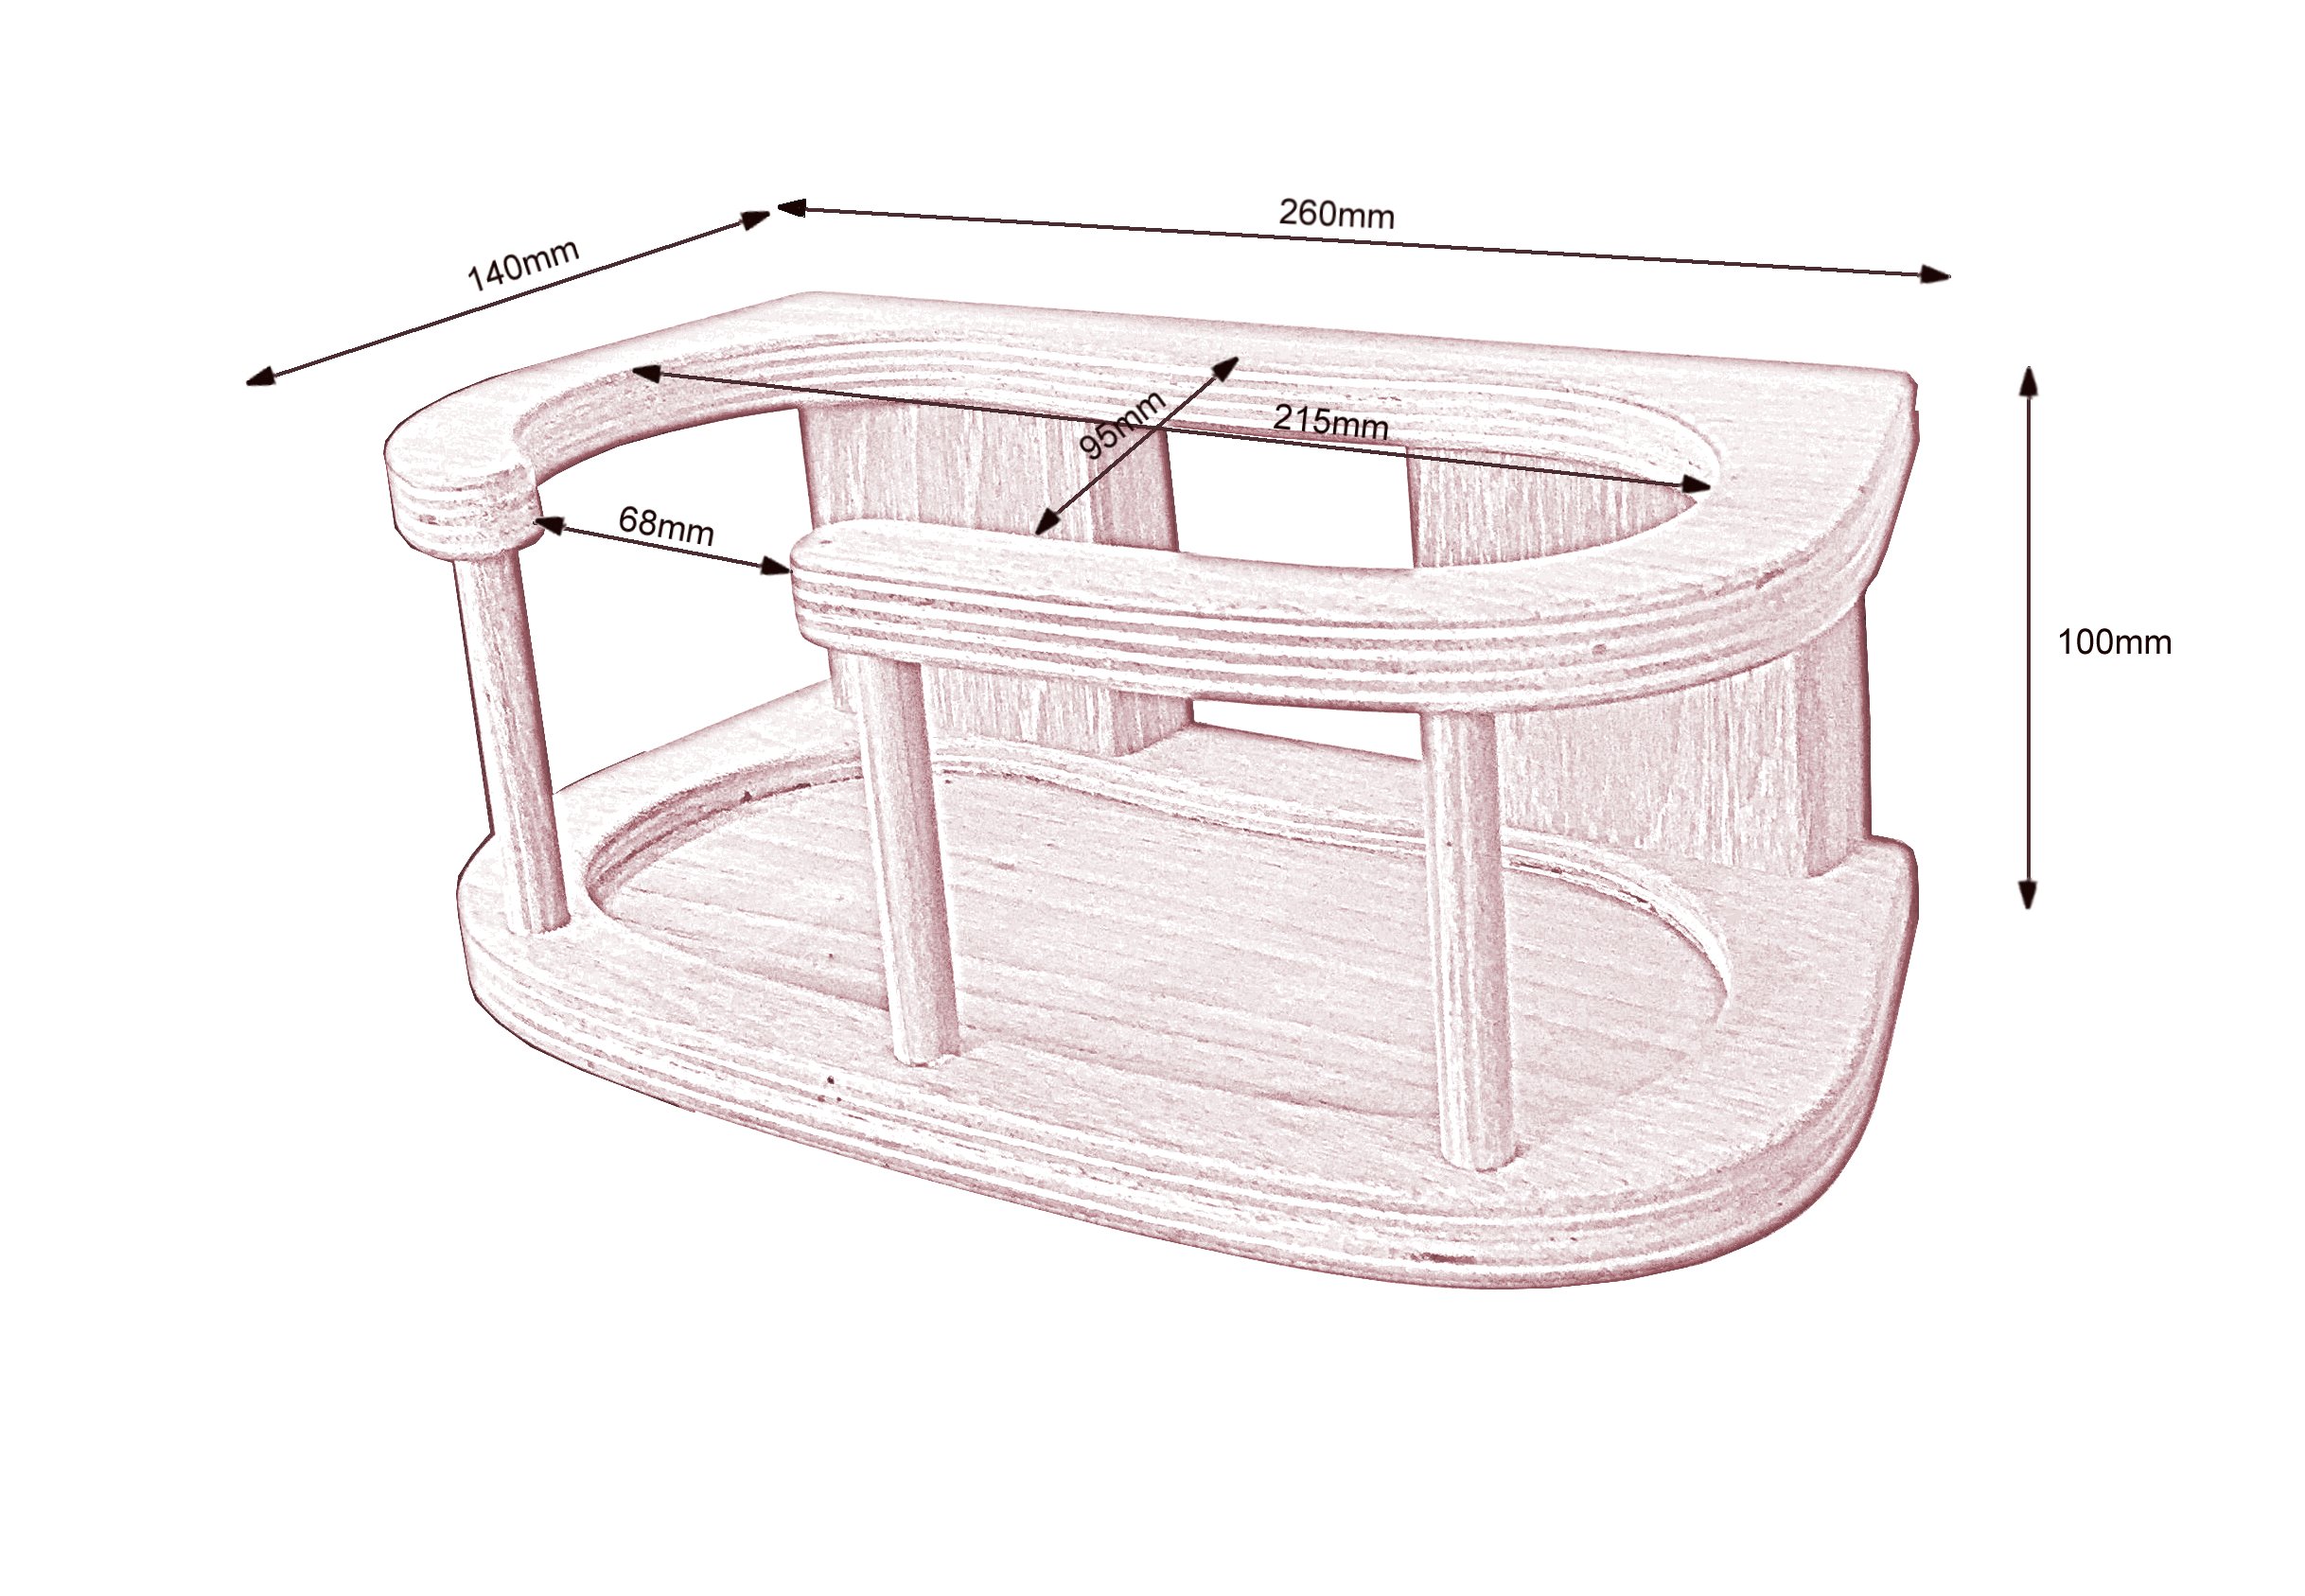 Sketch with measurements for holder binocular